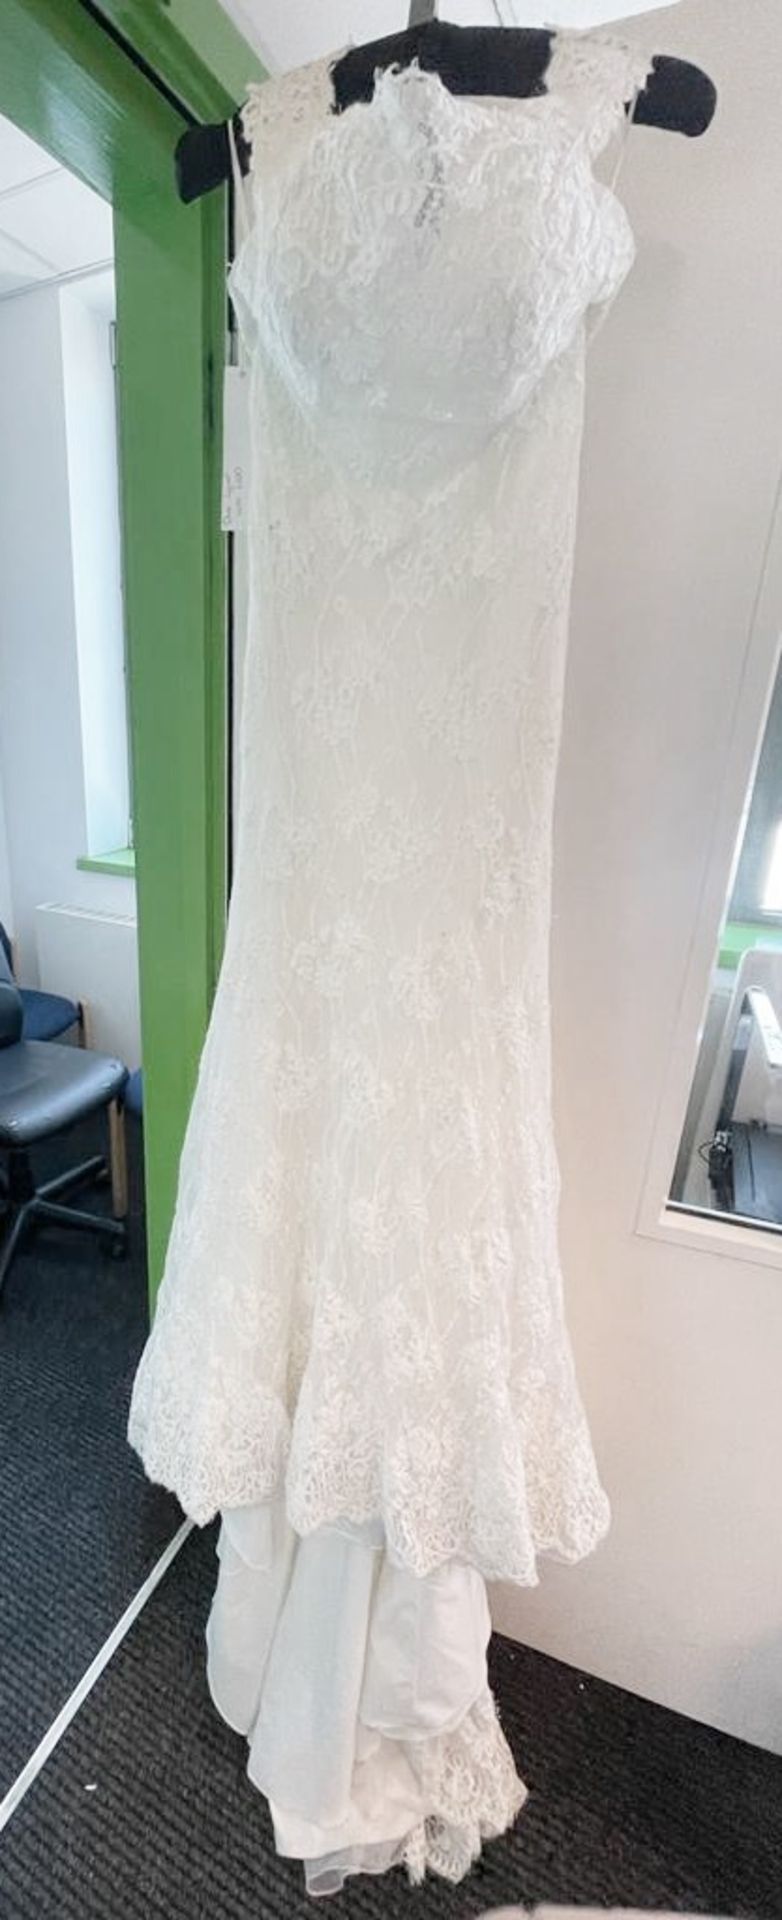 1 x DIANE LEGRAND Designer Fishtail Wedding Dress Bridal Gown - Style: 7209 - Size: UK 10 - Original